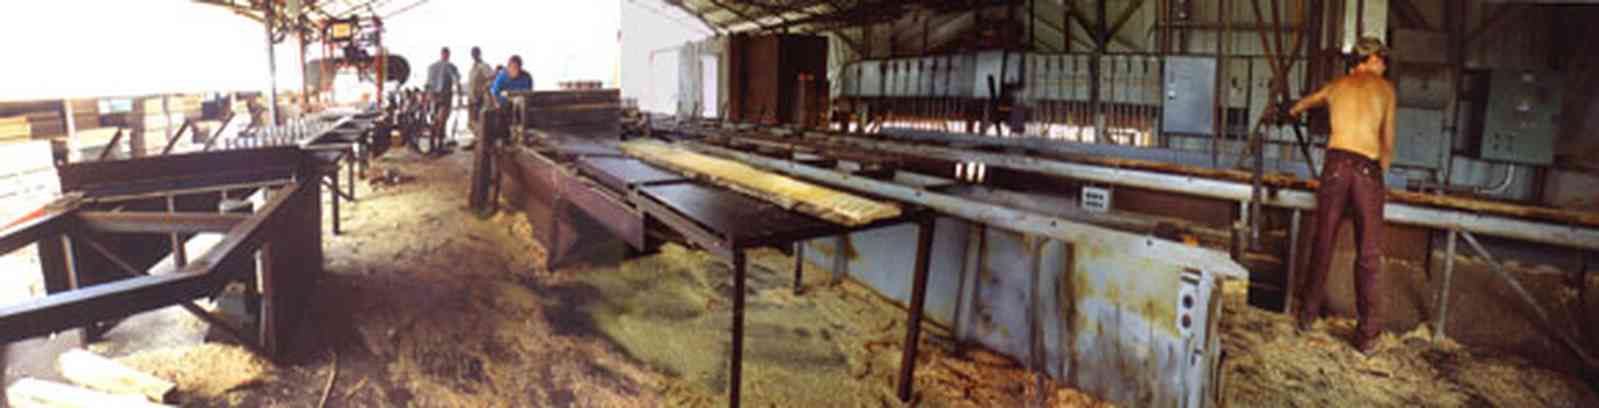 Harold:-Wilson-Lumber-Mill_10.jpg:  saw mill, cutting table, sawdust